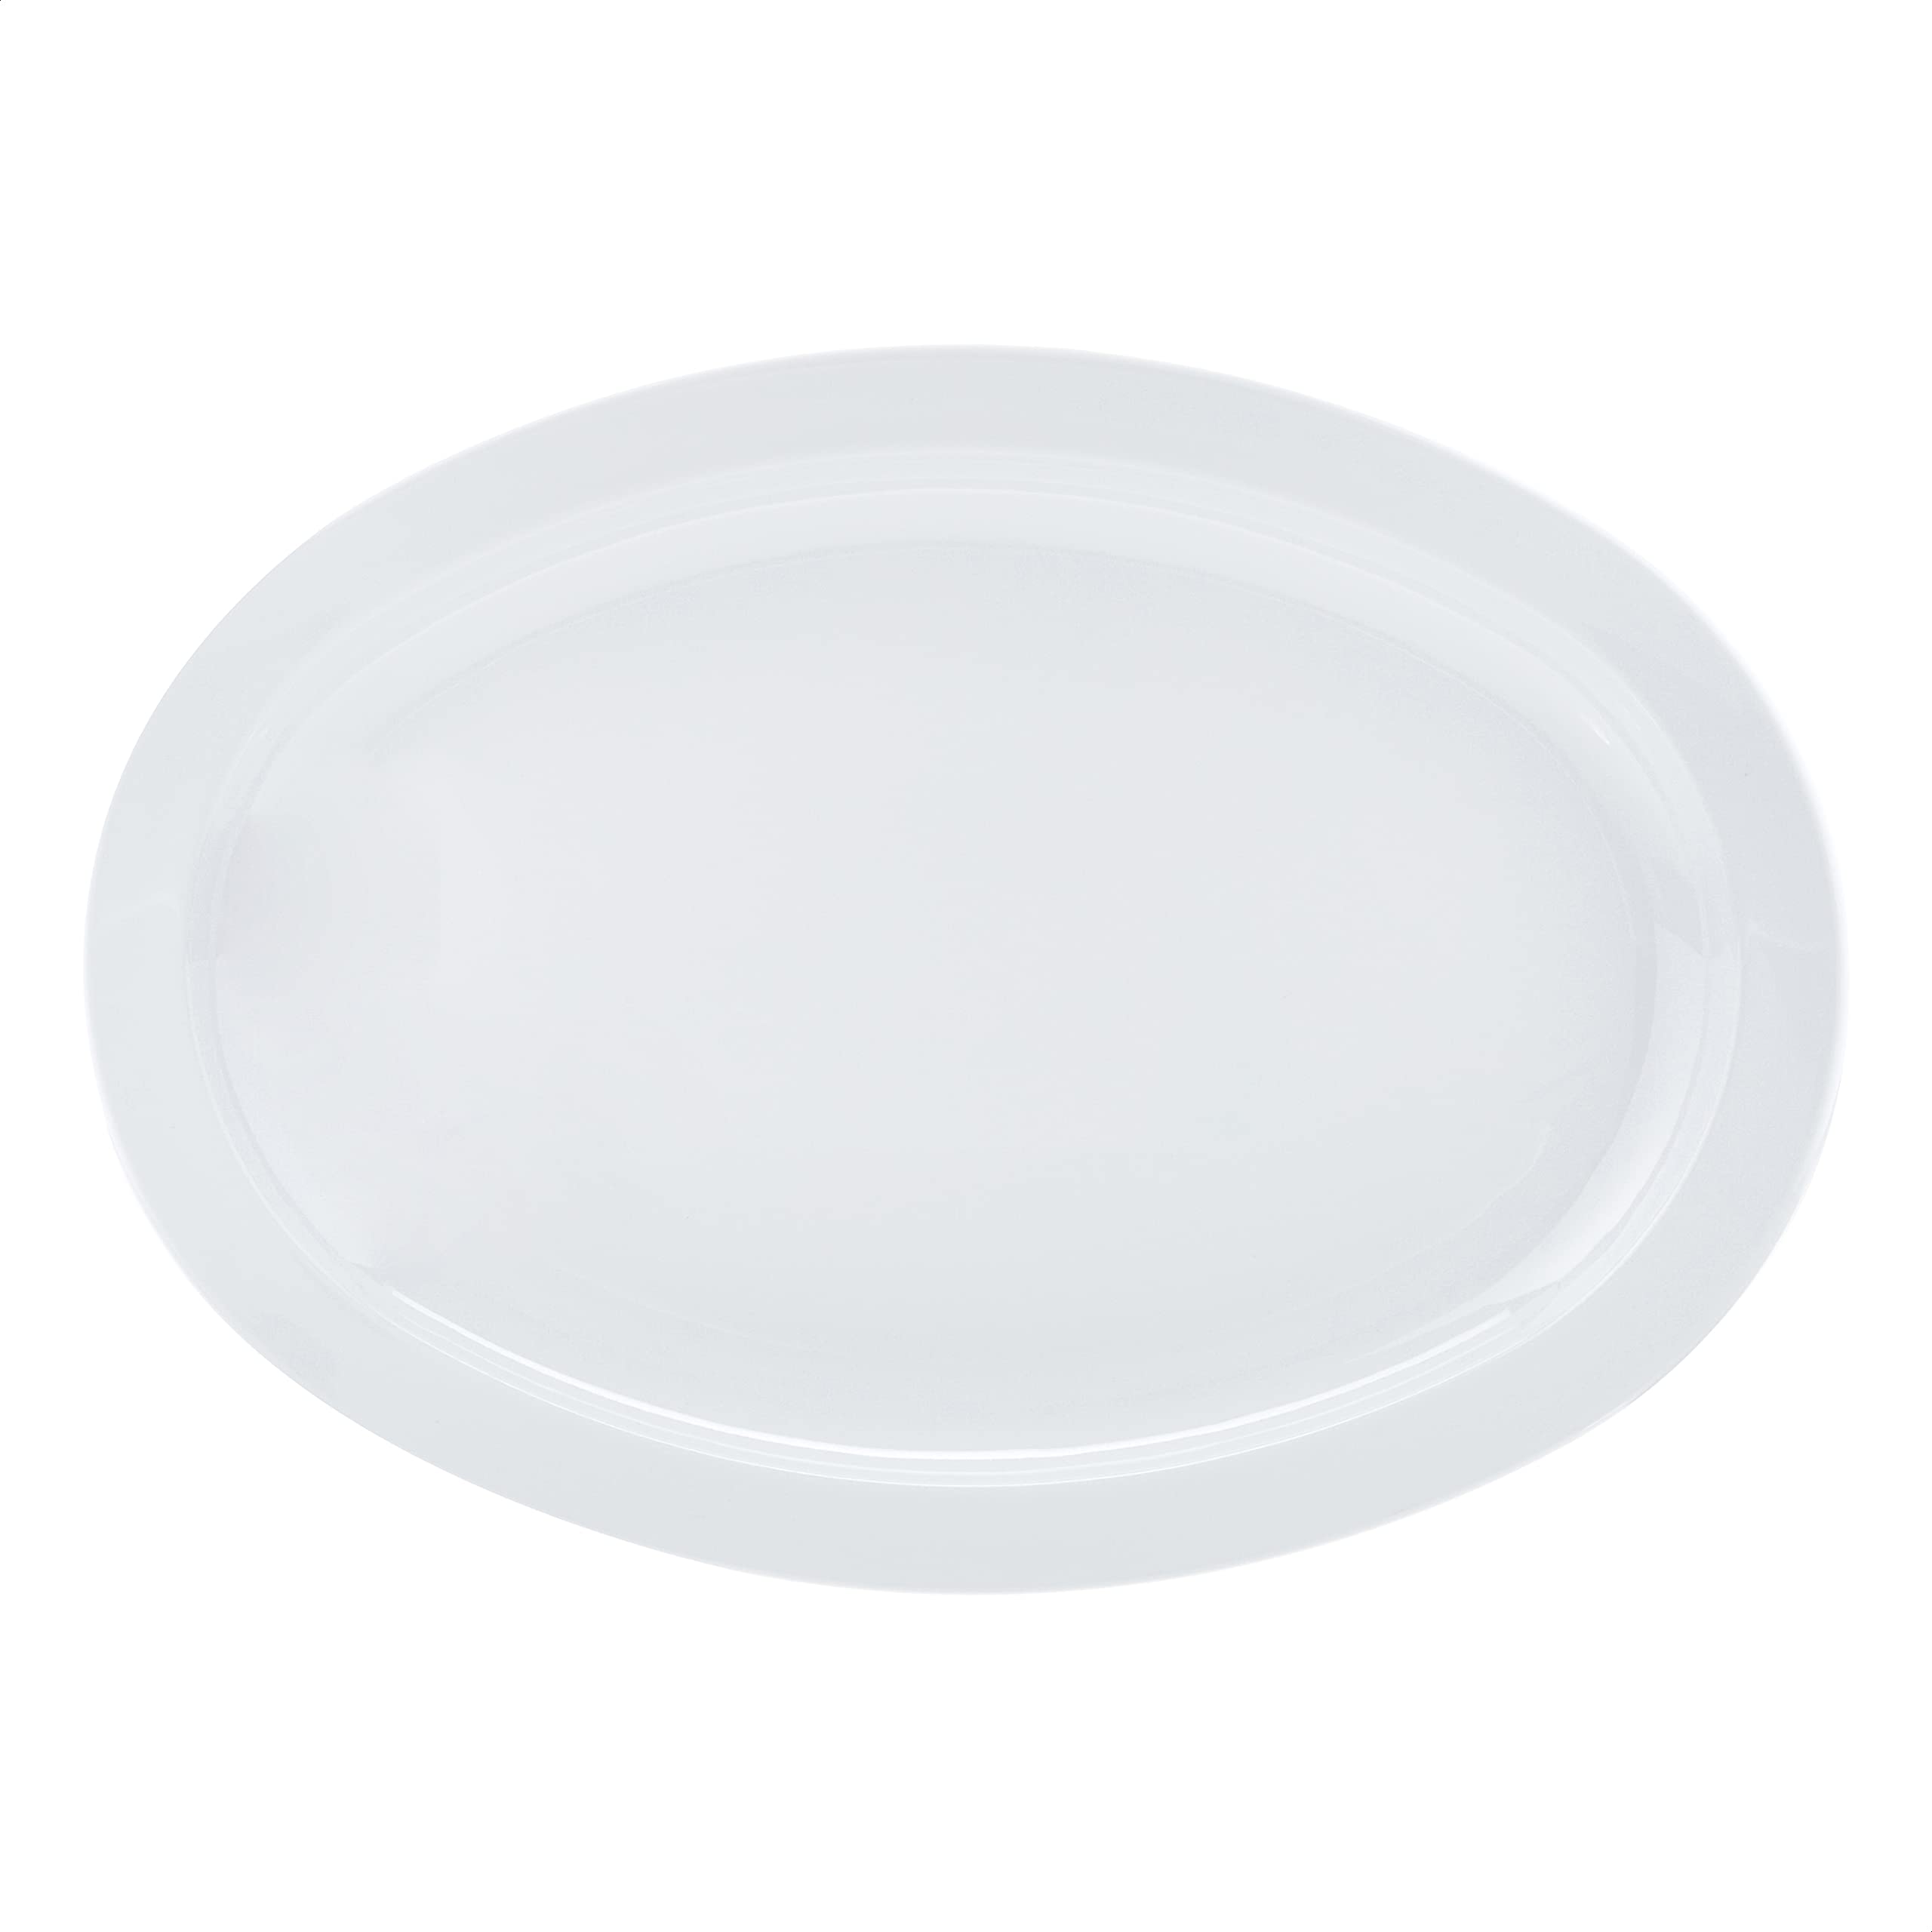 AmazonCommercial 13 in. x 9.75 in. White Melamine Oval Platter Narrow Rim - 6 Piece Set